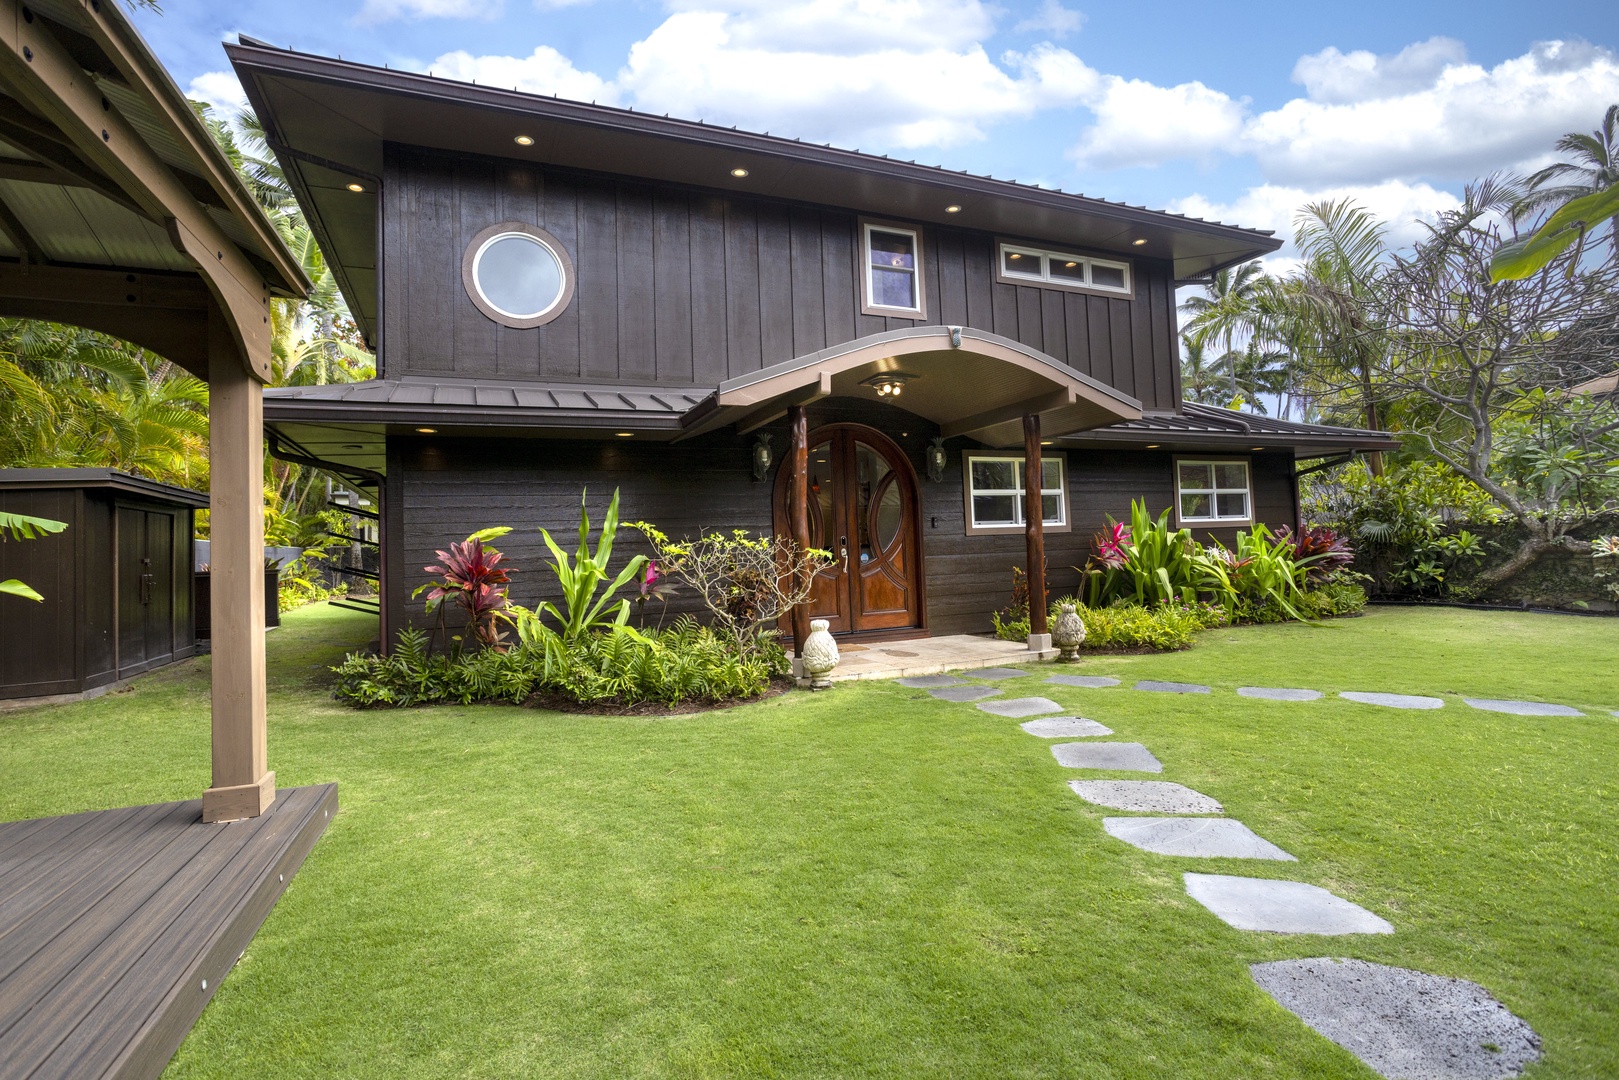 Kailua Vacation Rentals, Mokulua Seaside - Welcome home to Mokulua Seaside!